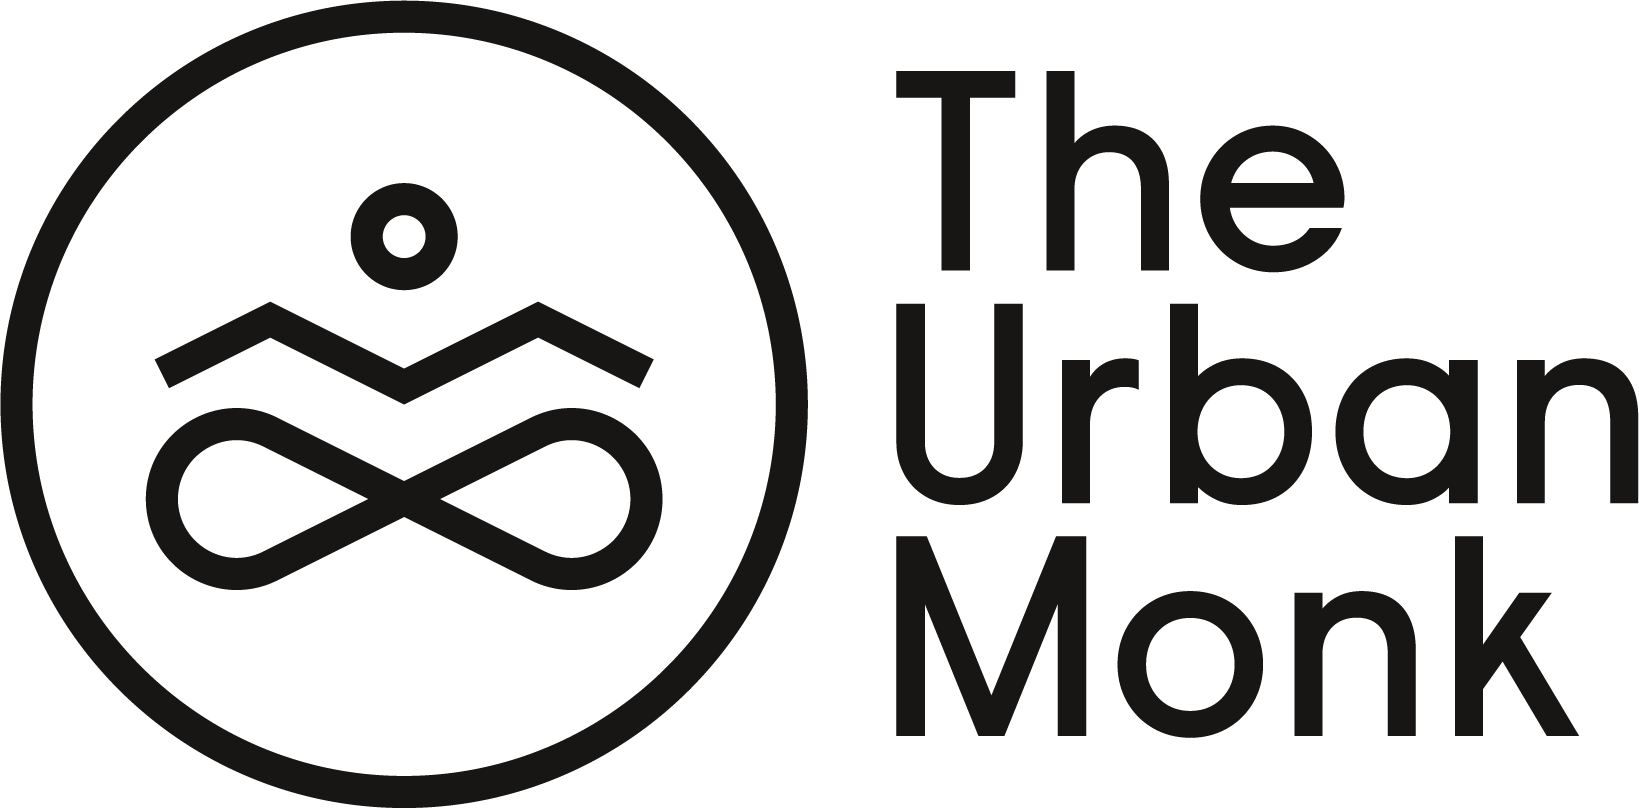 The Urban Monk